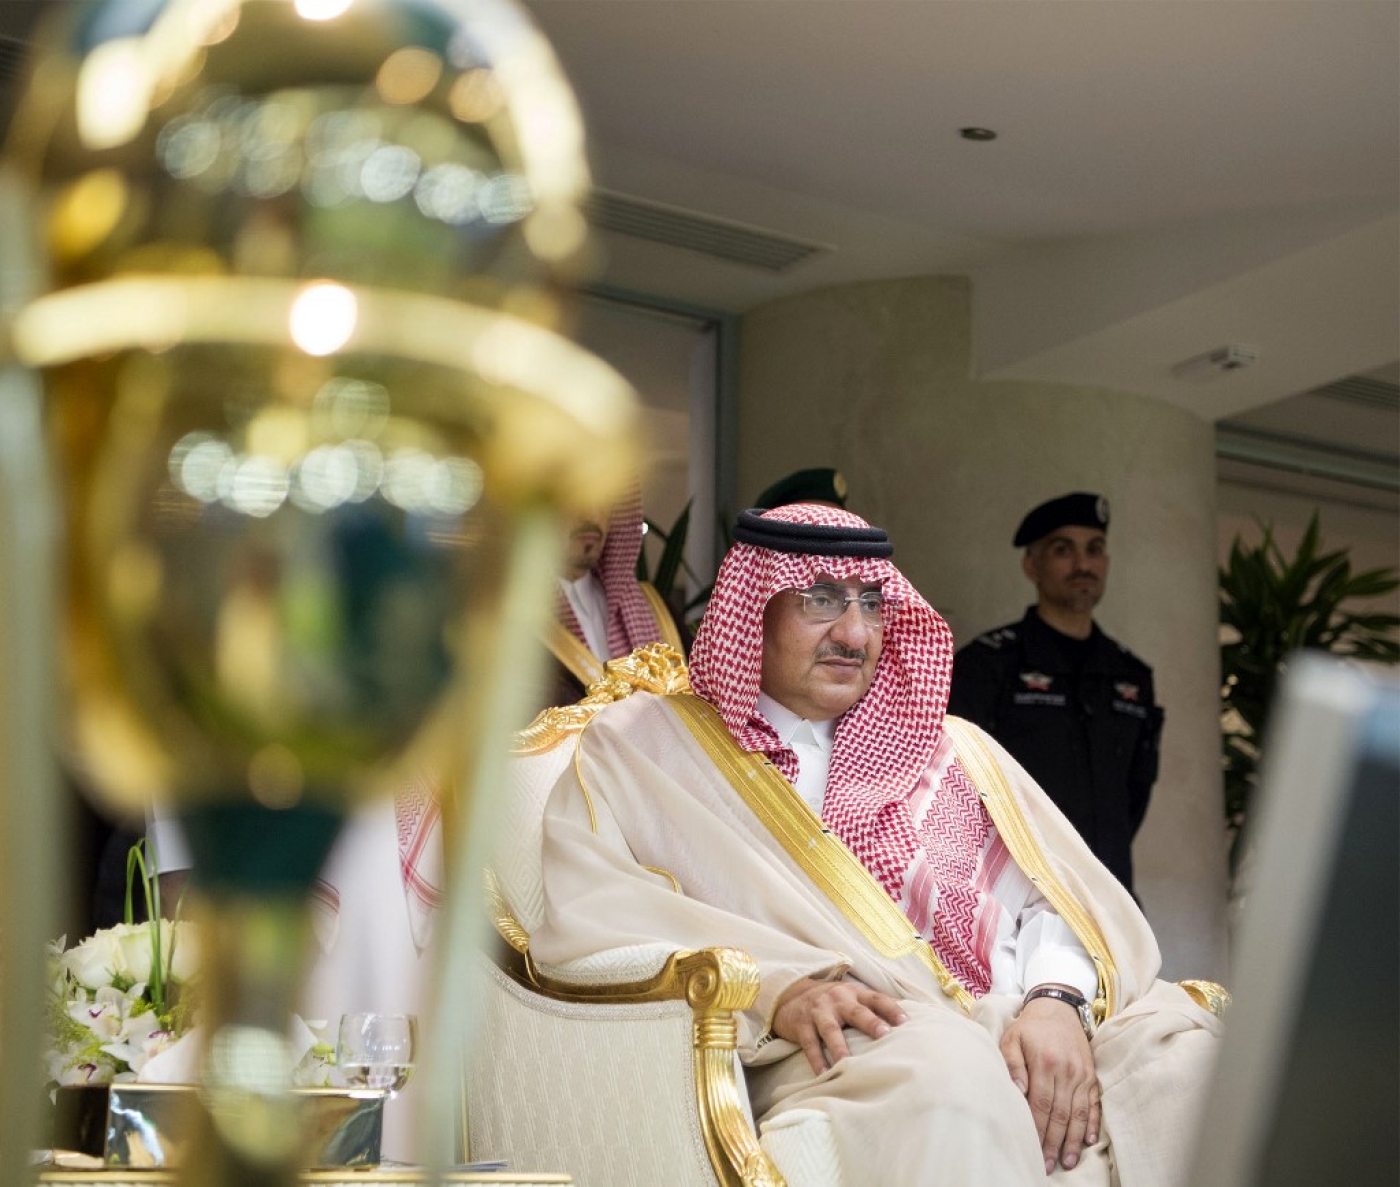 Mohammed bin Nayef sitting down at the Saudi Royal Palace in 2017.